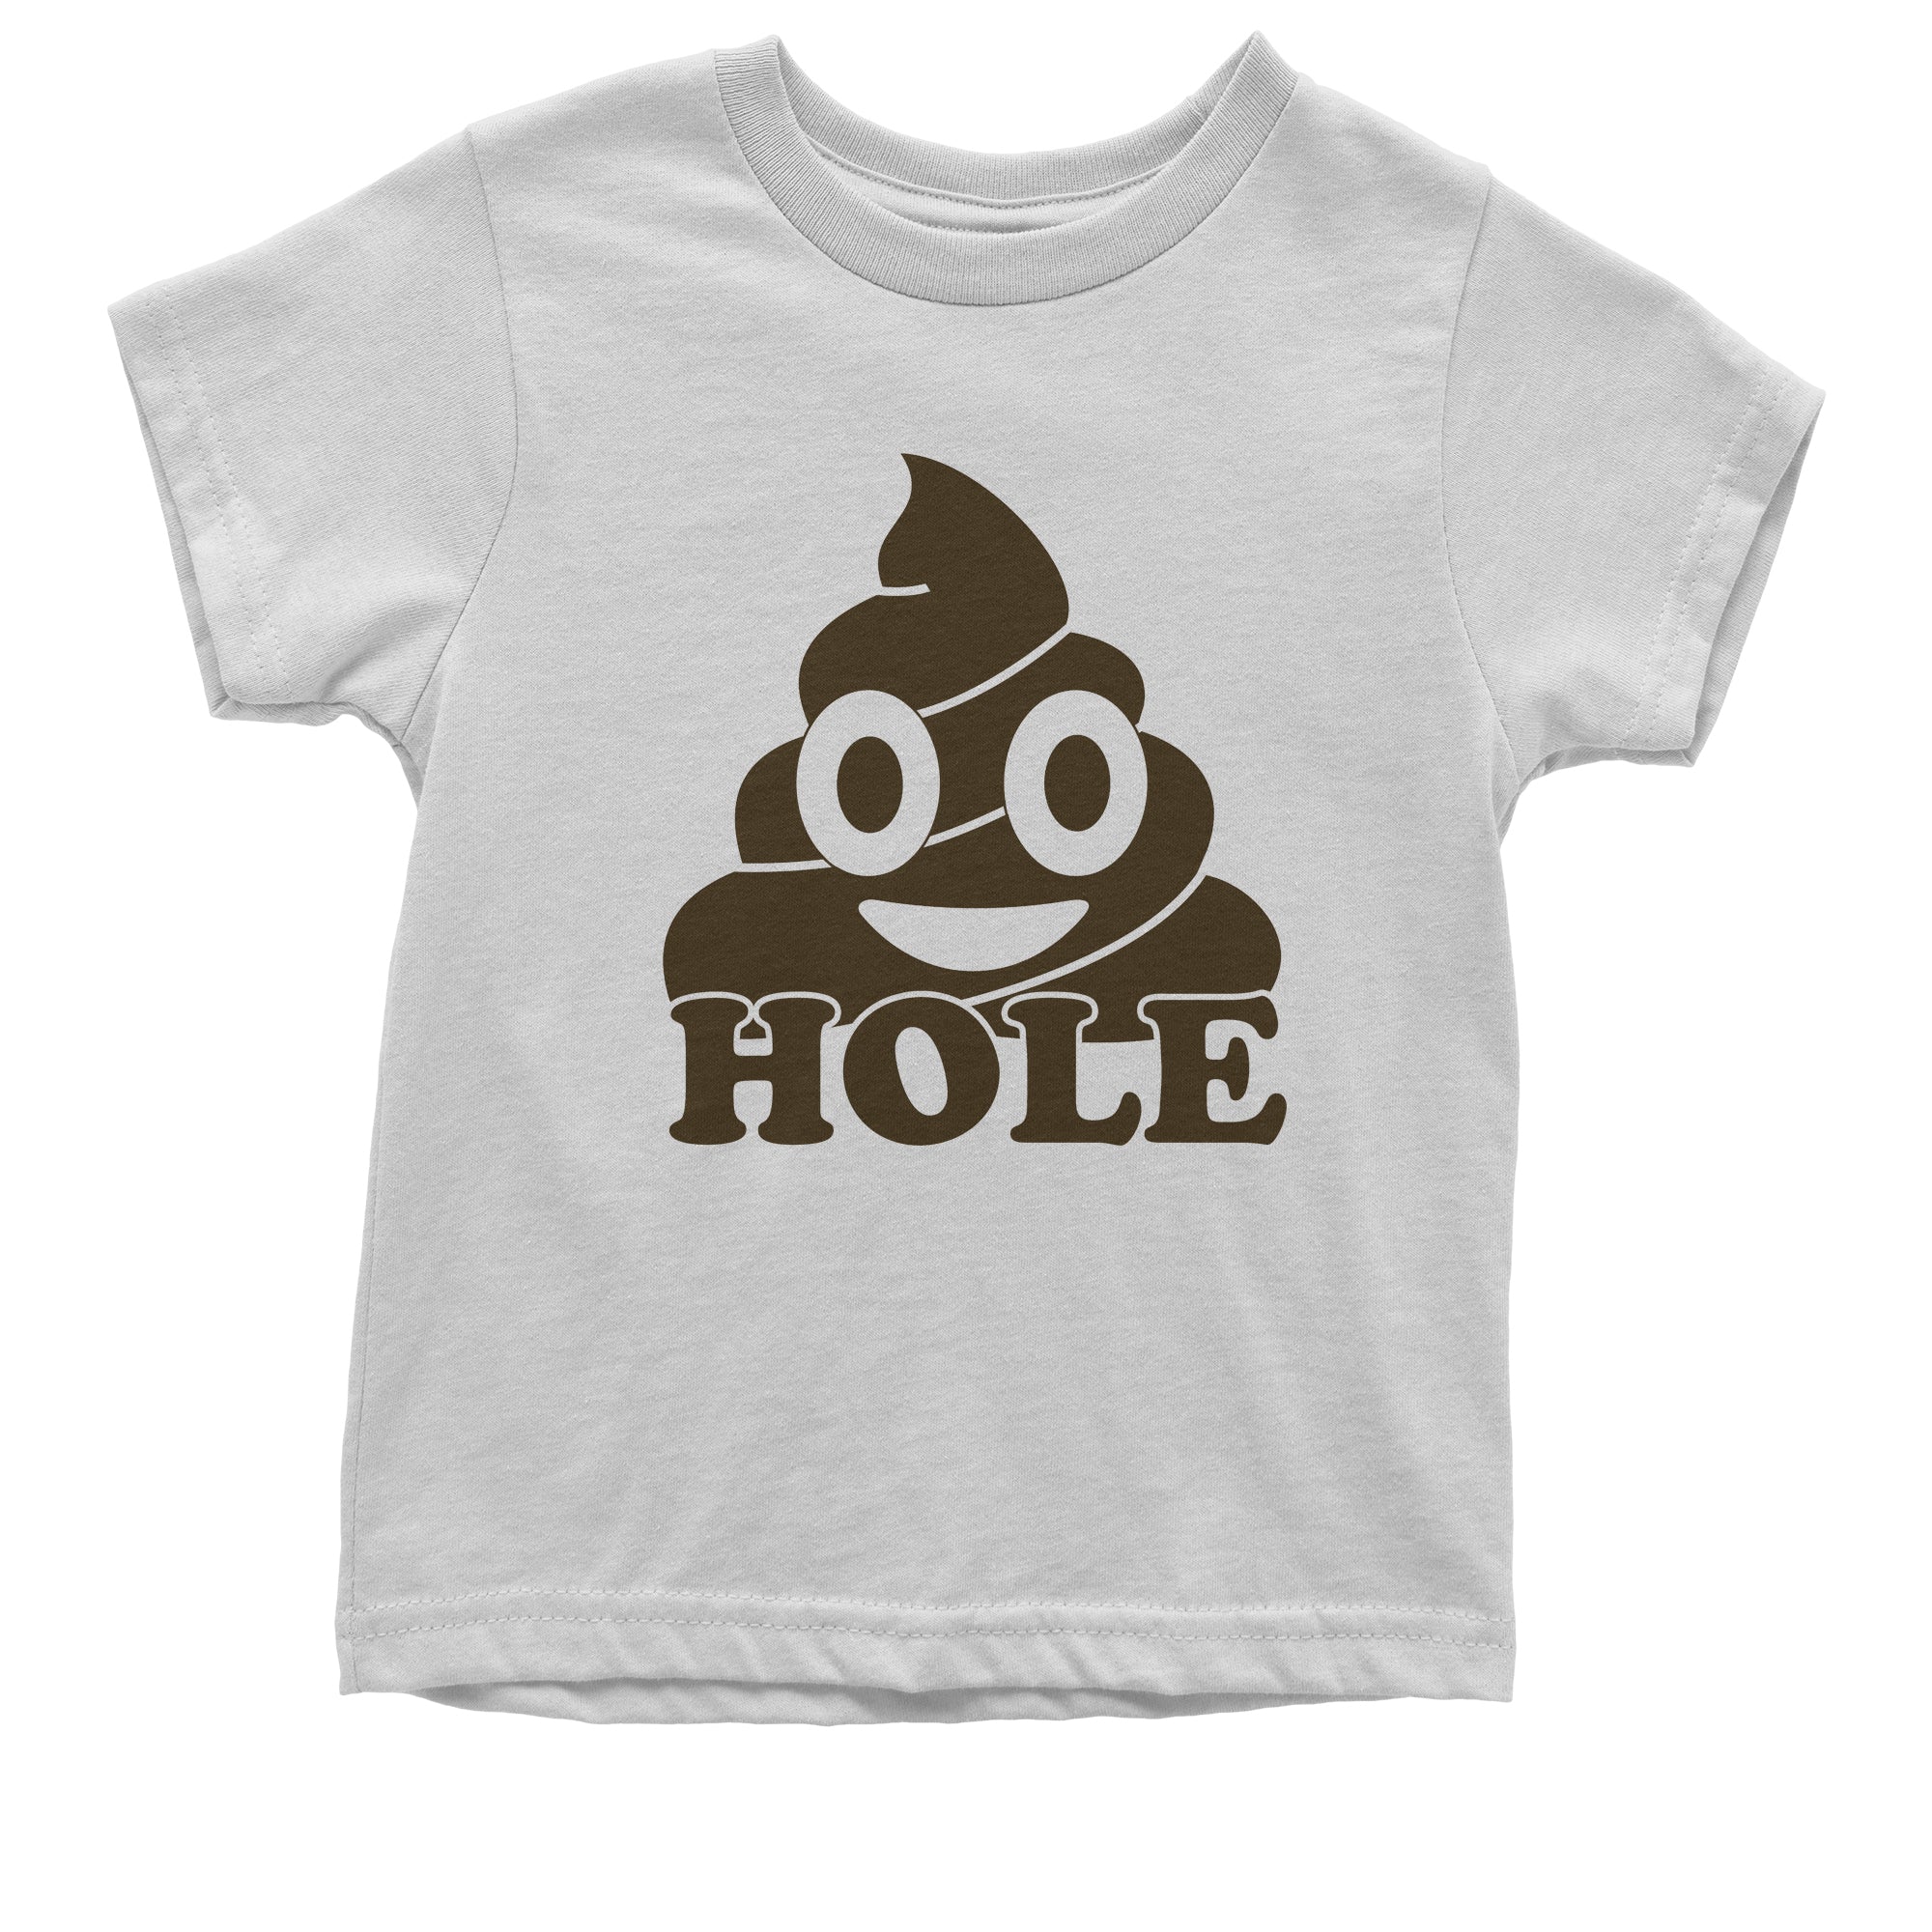 Funny Emoticon Sh*thole Trump Political Joke Kid's T-Shirt